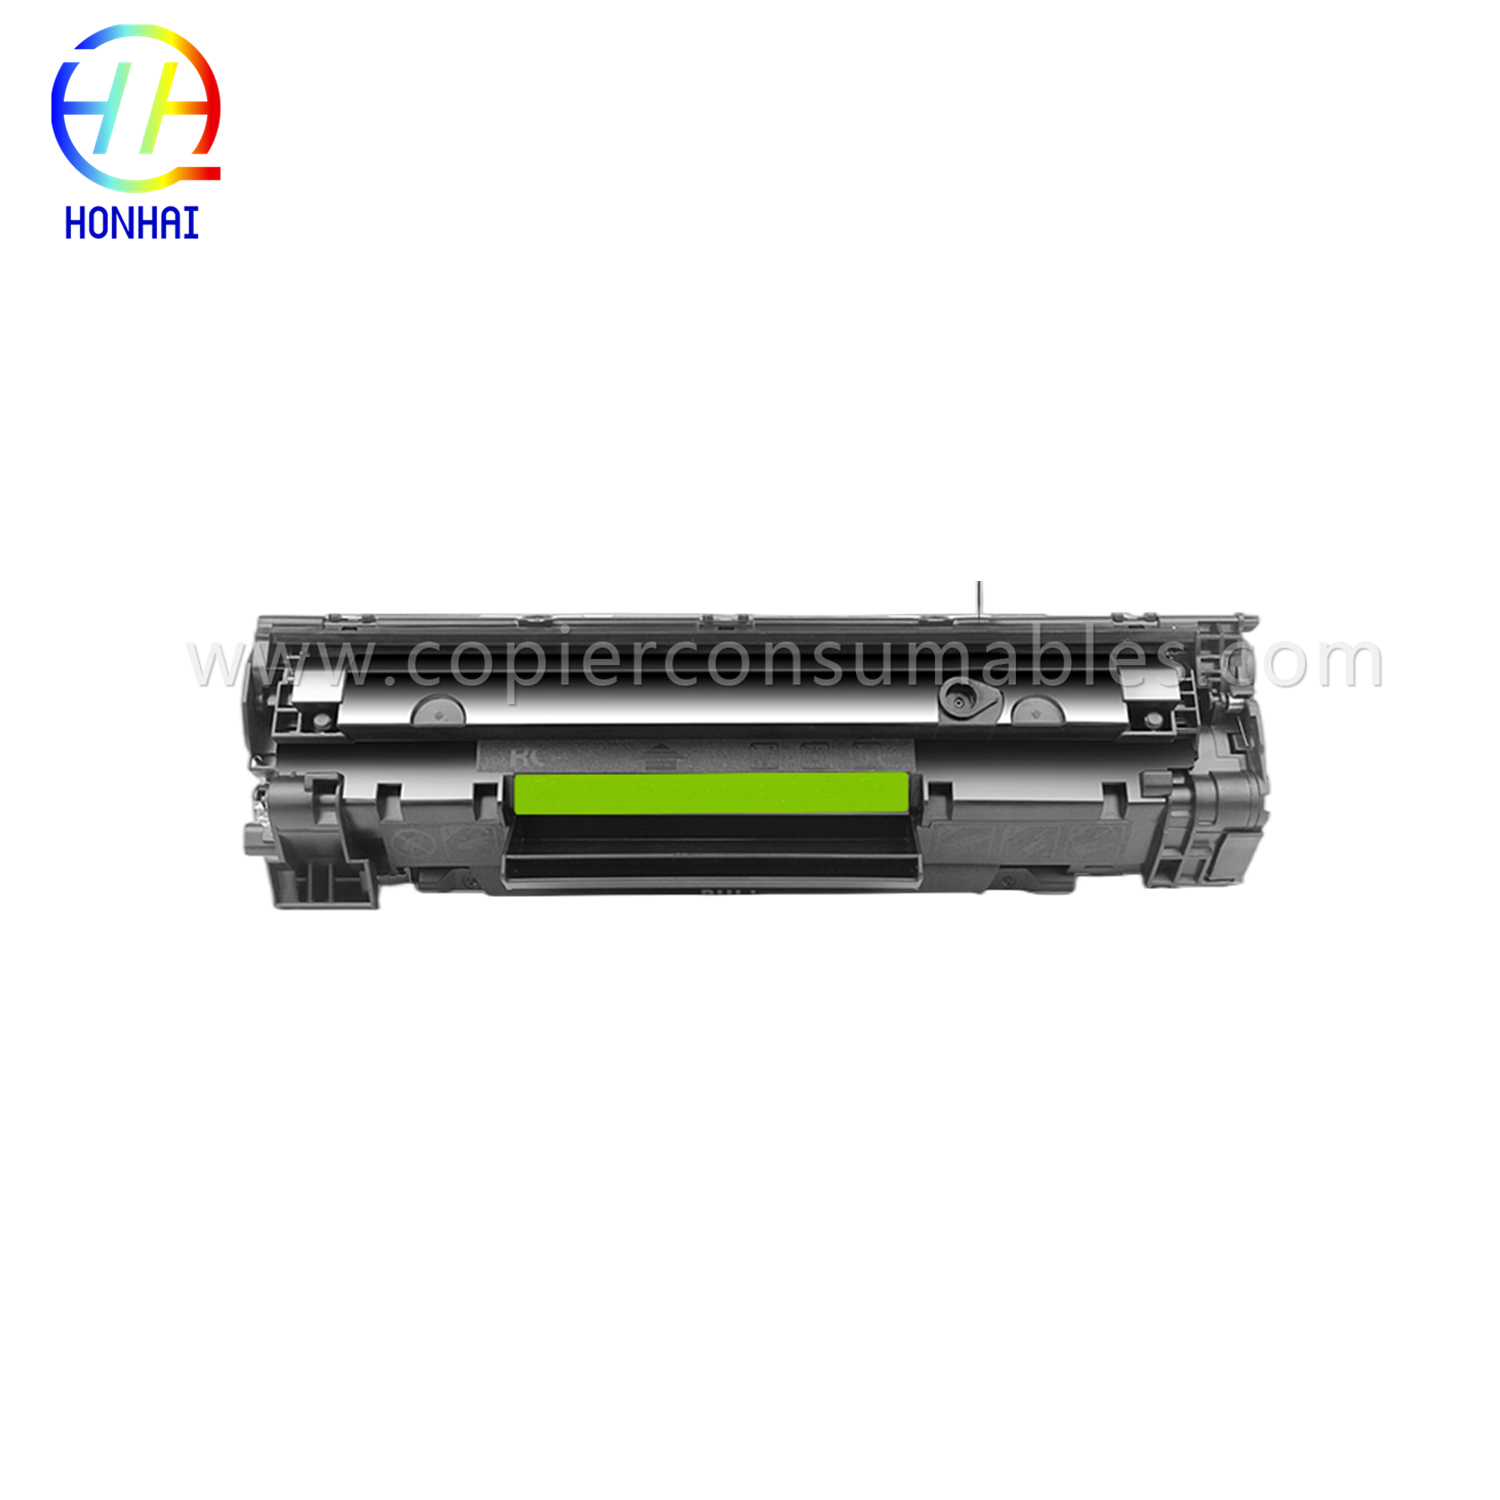 https://www.copierhonhaitech.com/toner-cartridge-voor-hp-laserjet-p1005-cb435a-35a-oem-product/